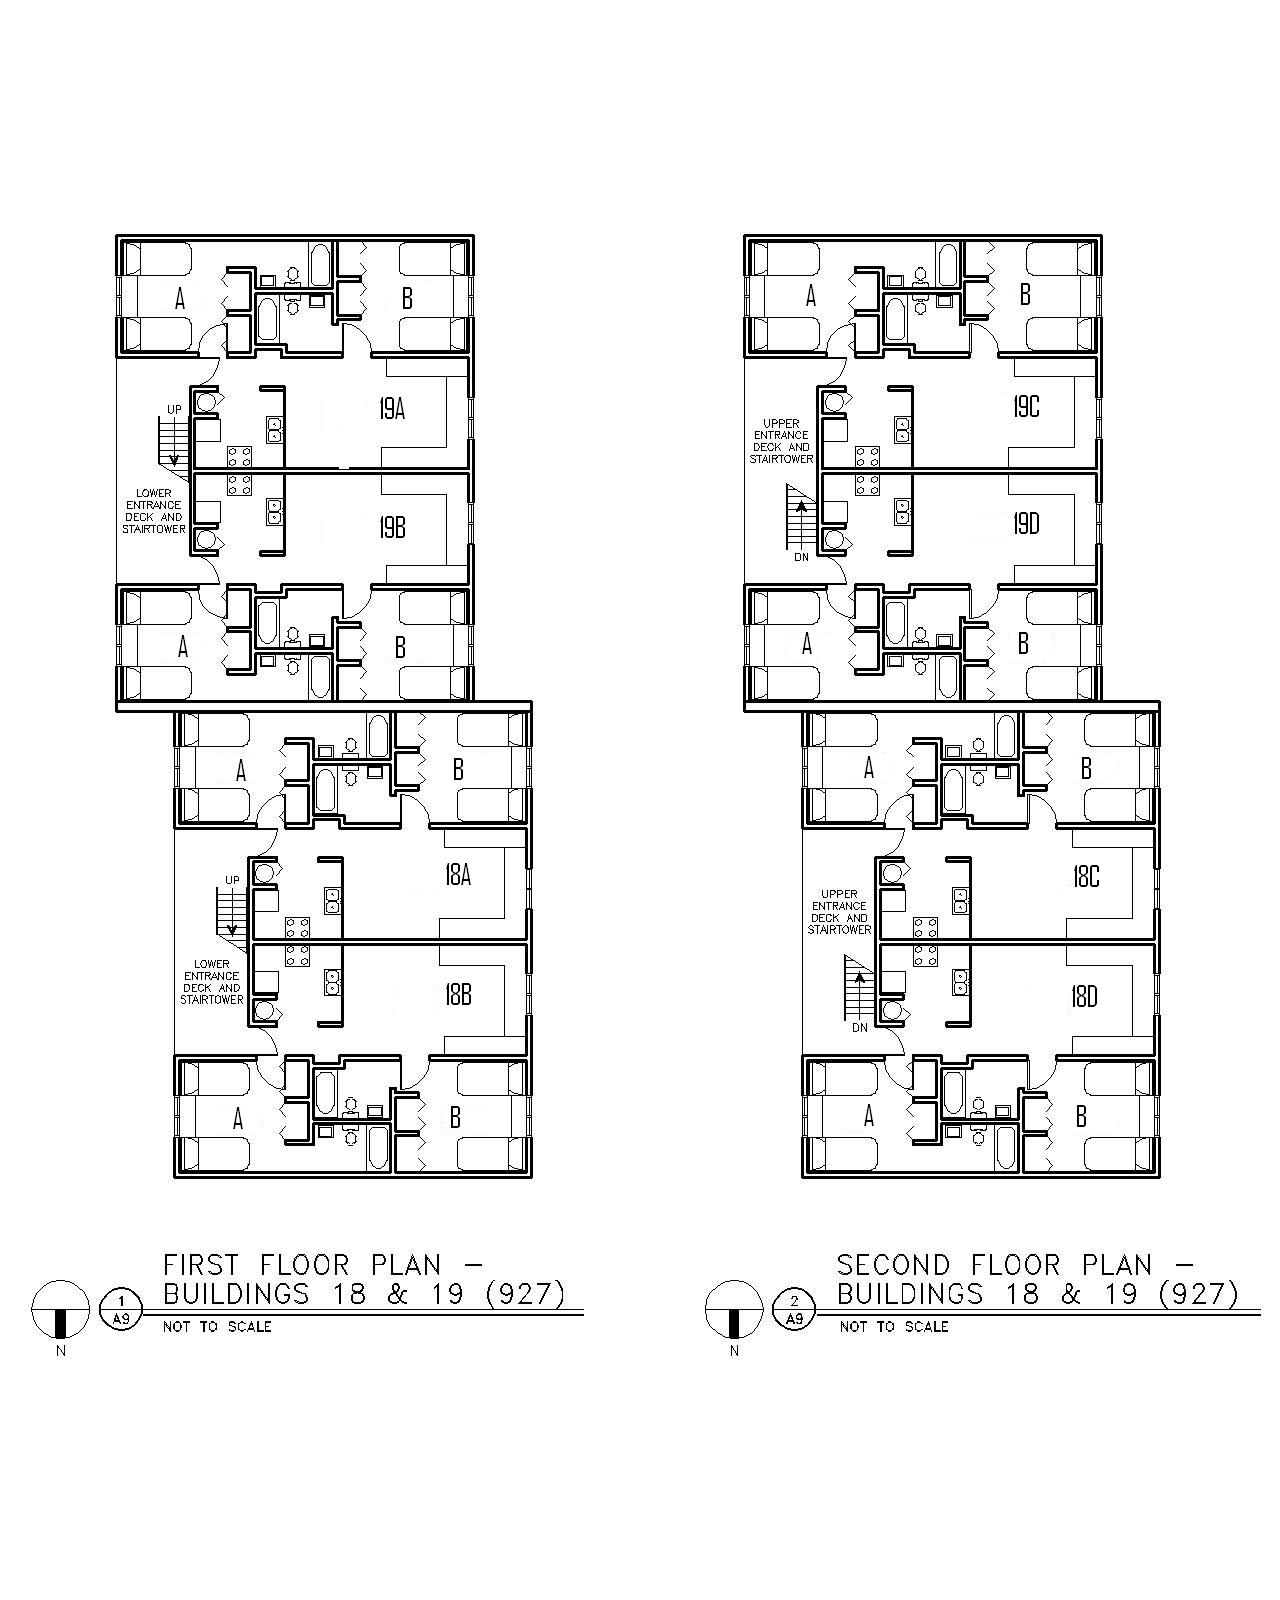 Floor Plan for Buildings 18 & 19